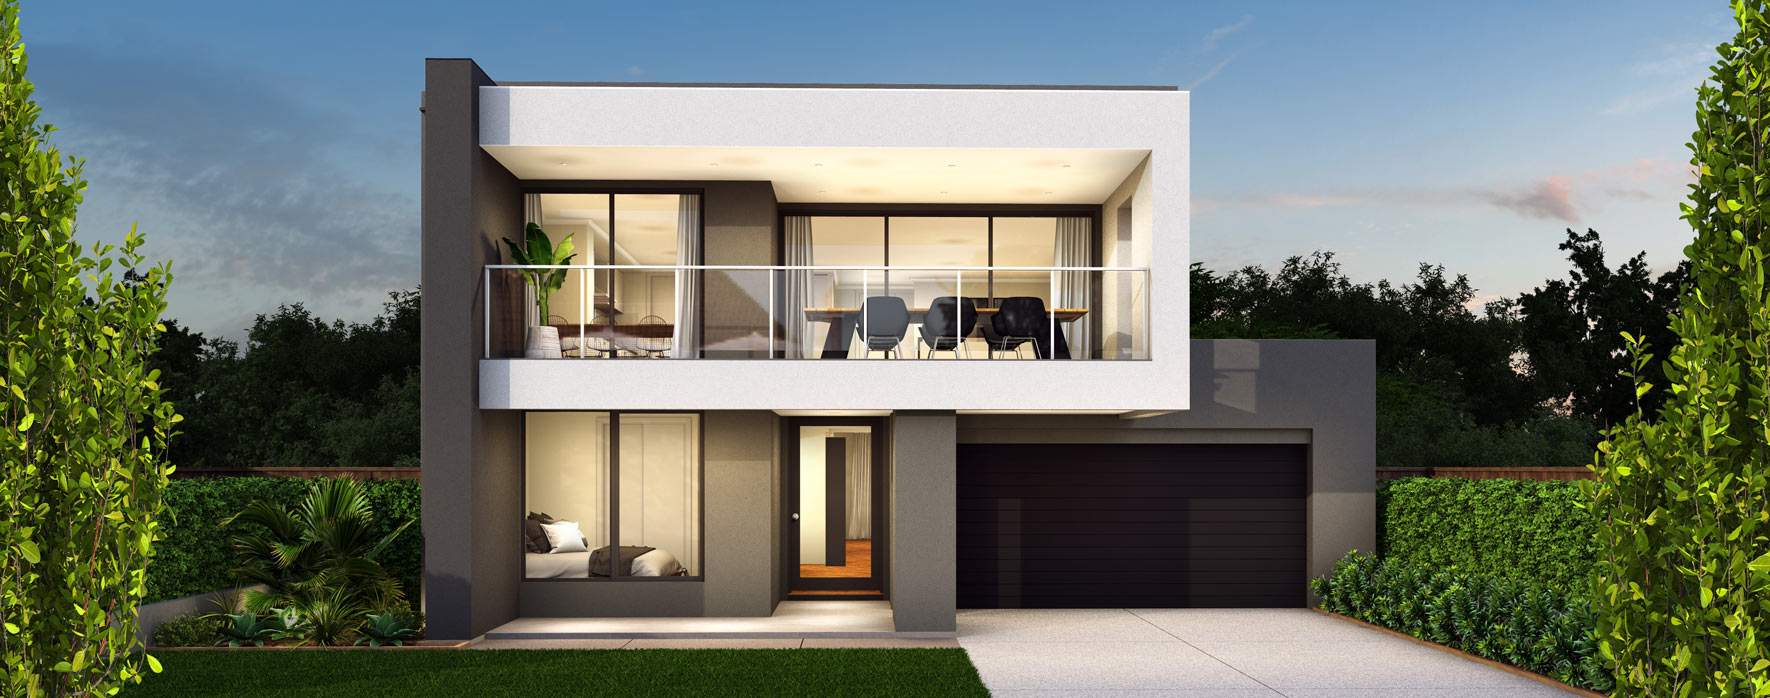 seabreeze-35-double-storey-house-design-edge-facade-header.jpg